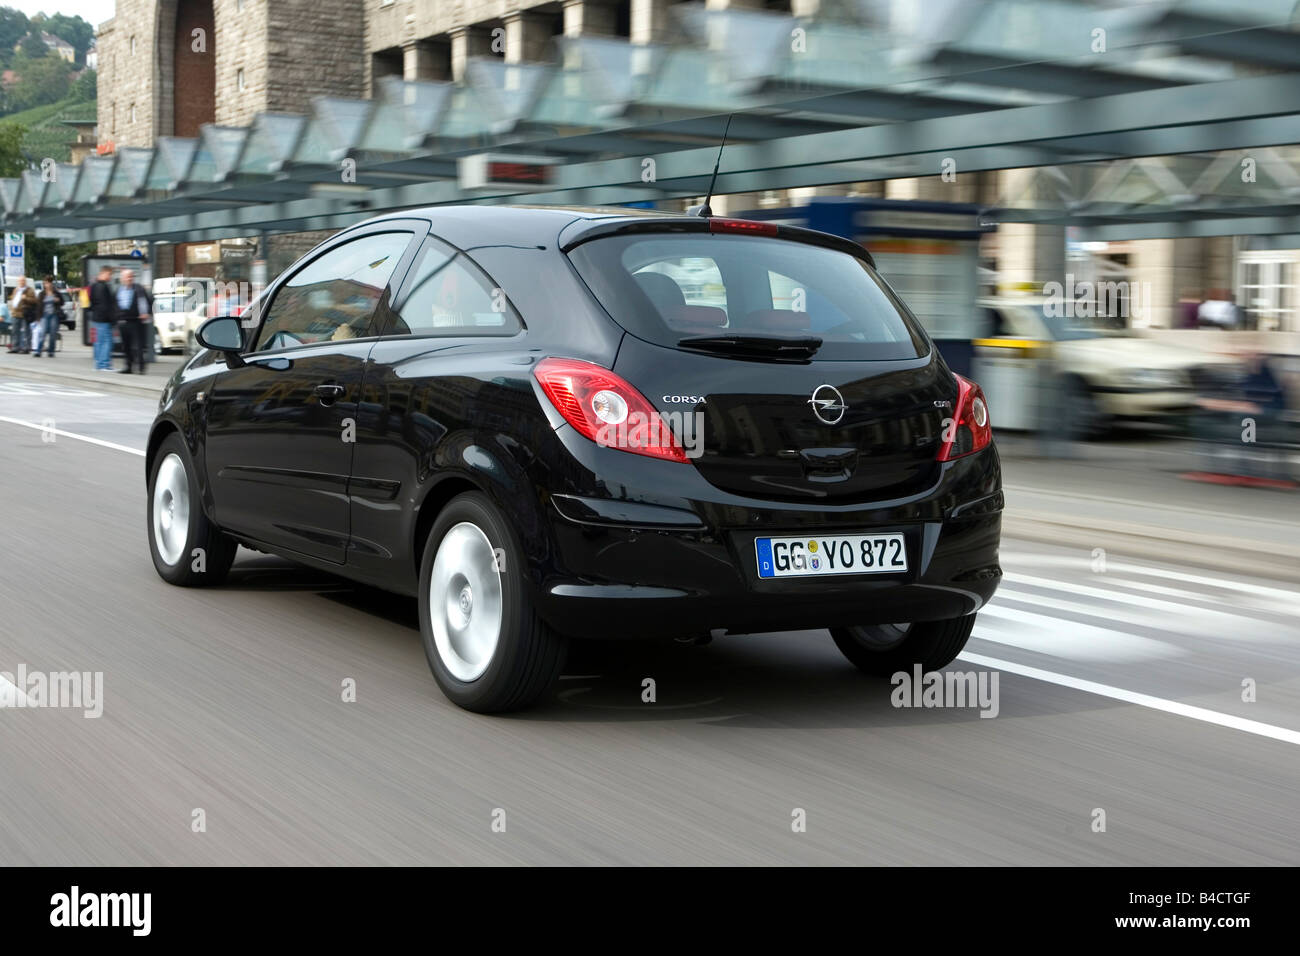 Opel Corsa 1.3 CDTI Edition, model year 2006-, black, driving